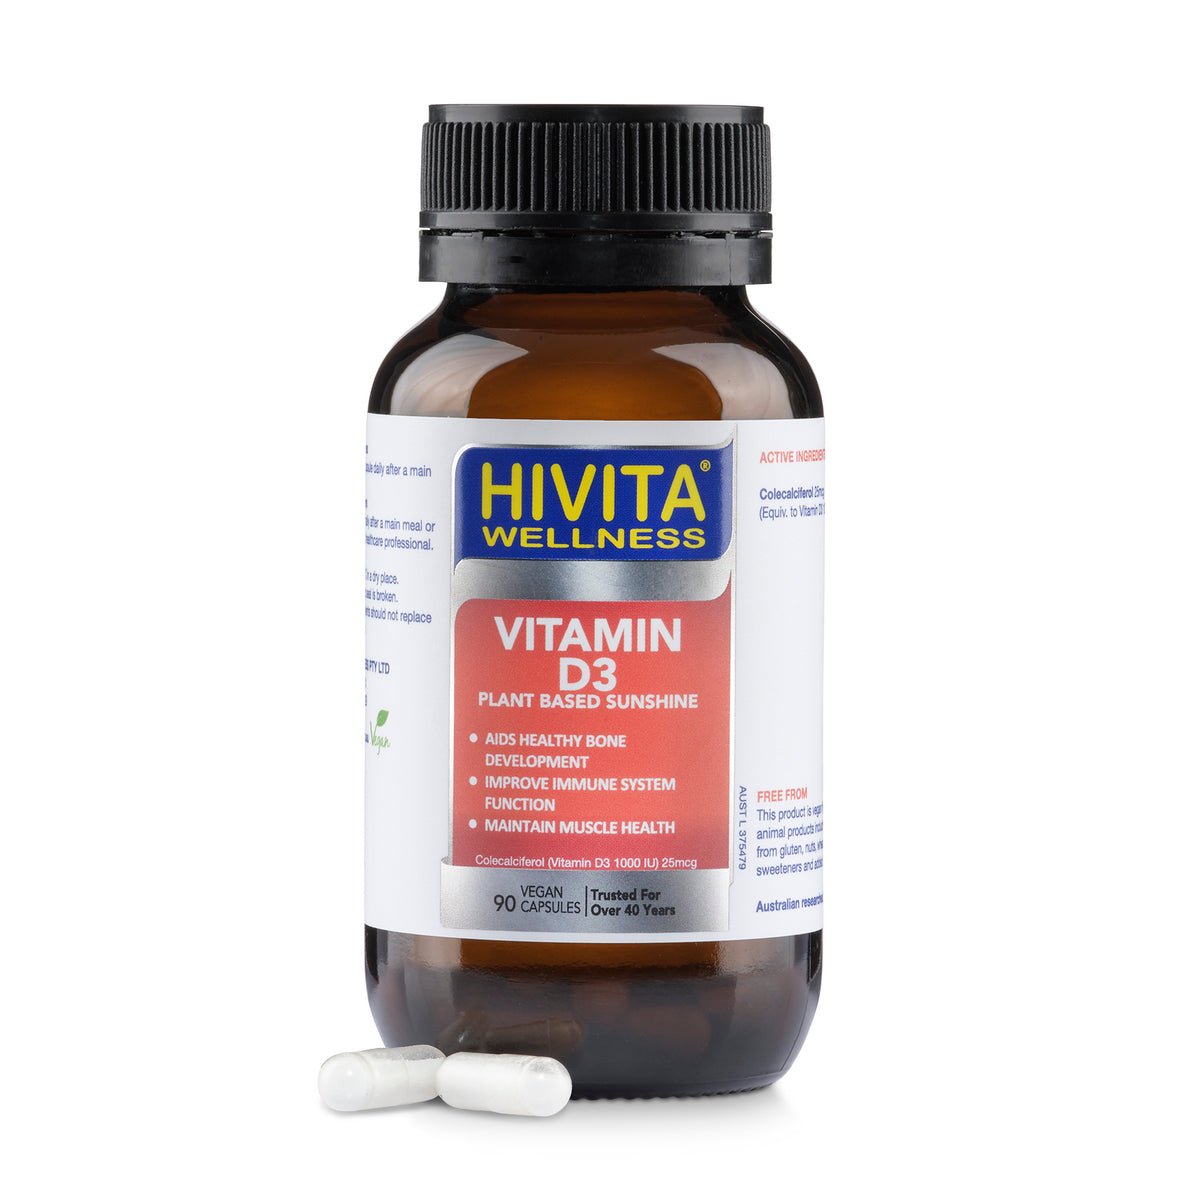 HIVITA Wellness Vitamin D3 Plant Based Sunshine 90 capsules